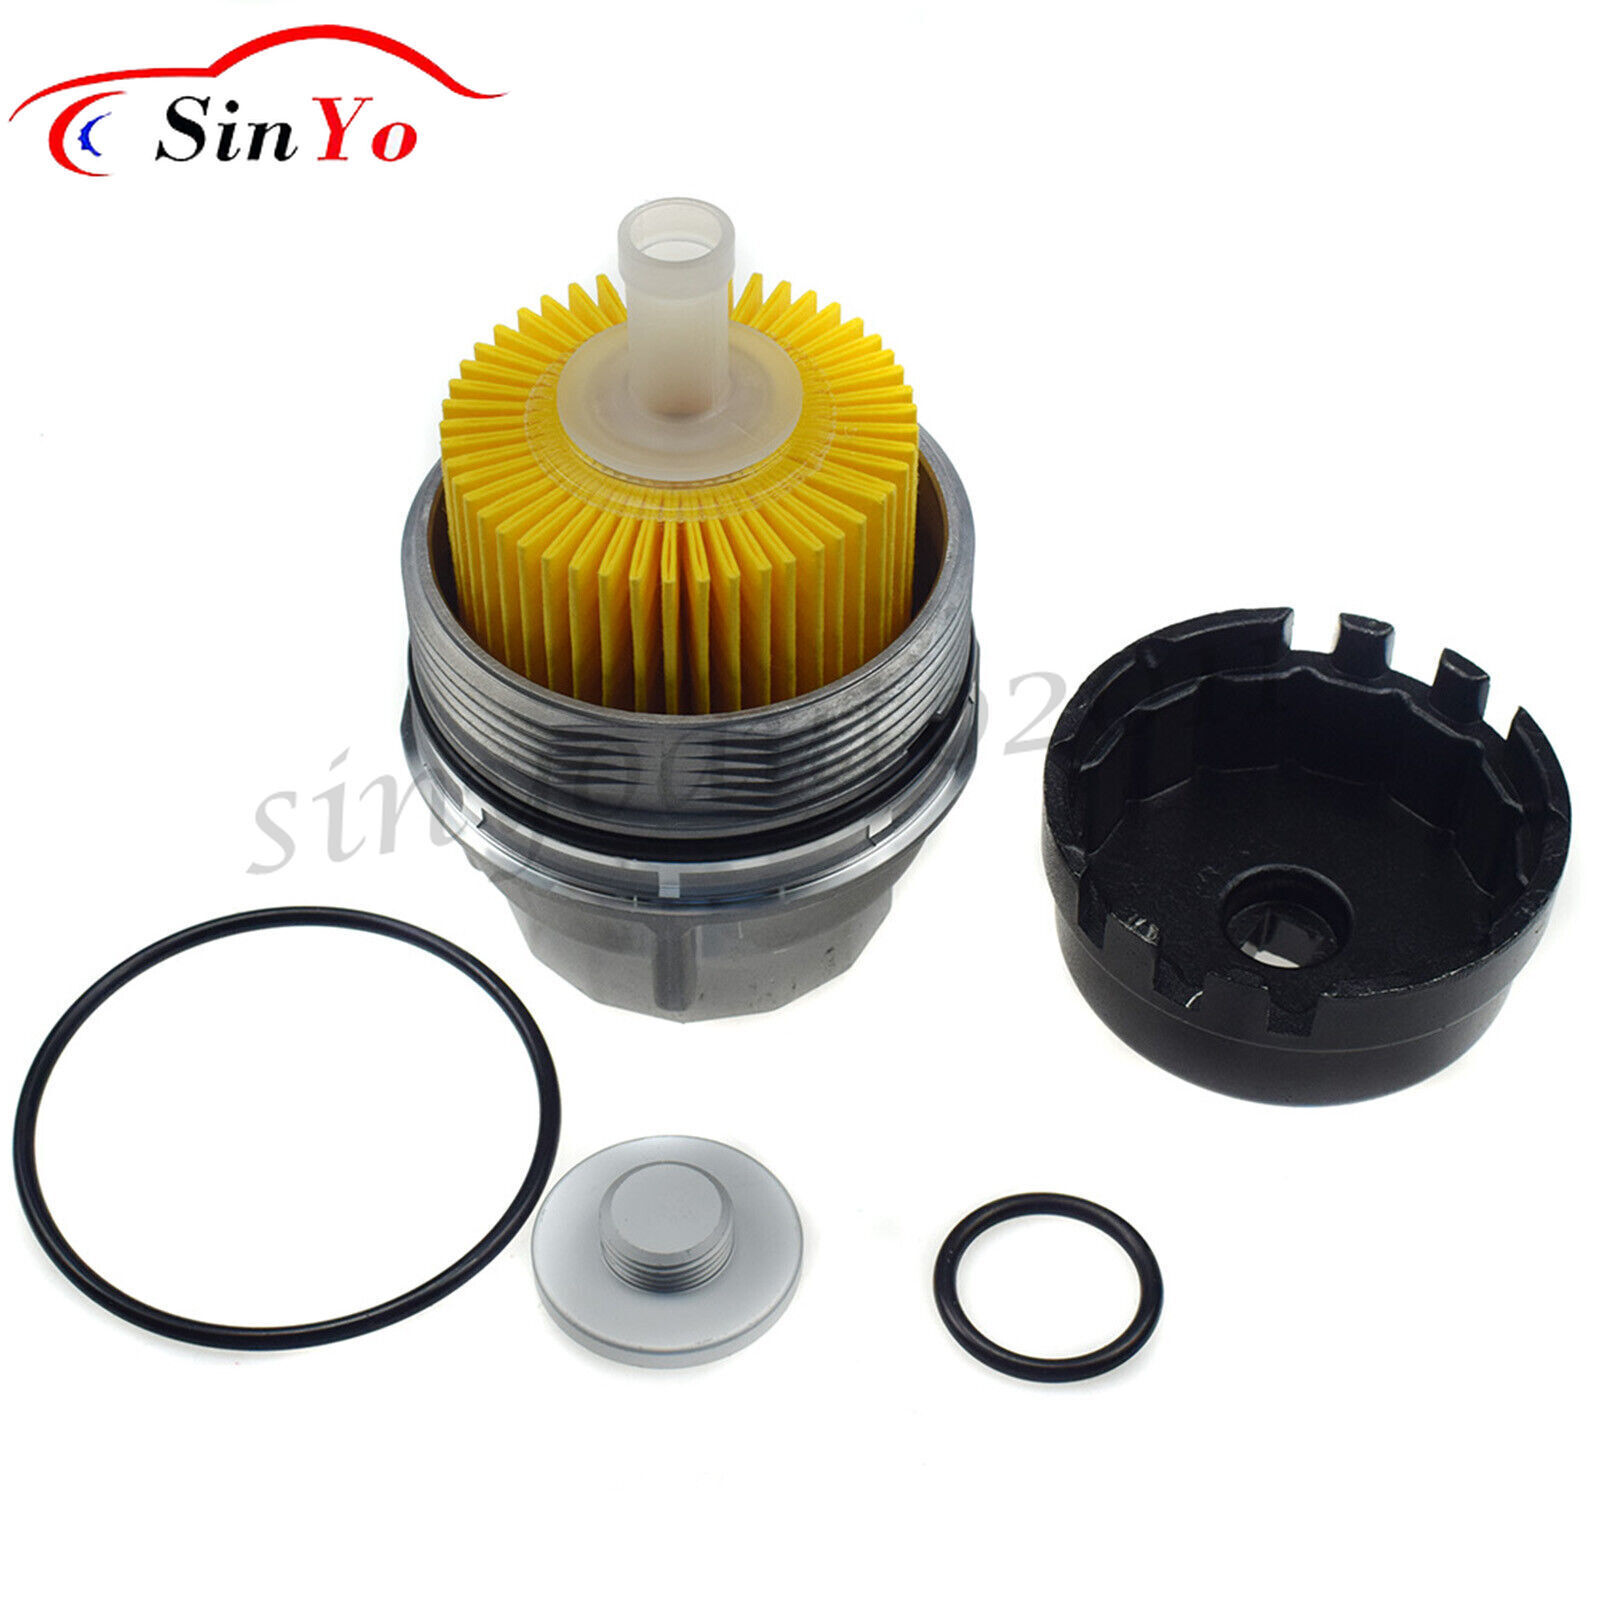 For Toyota Lexus Oil Filter Housing Cap + Plug Drain +Wrench +Filter 15620-31060